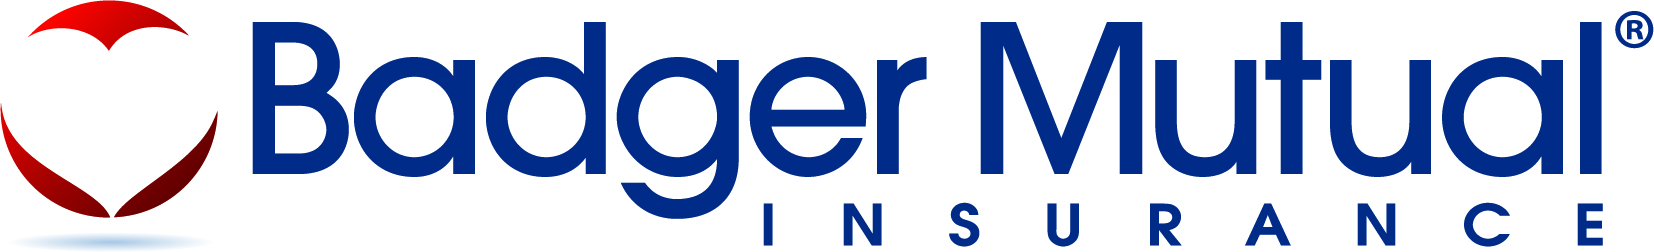 logo, company name, badger mutual insurance